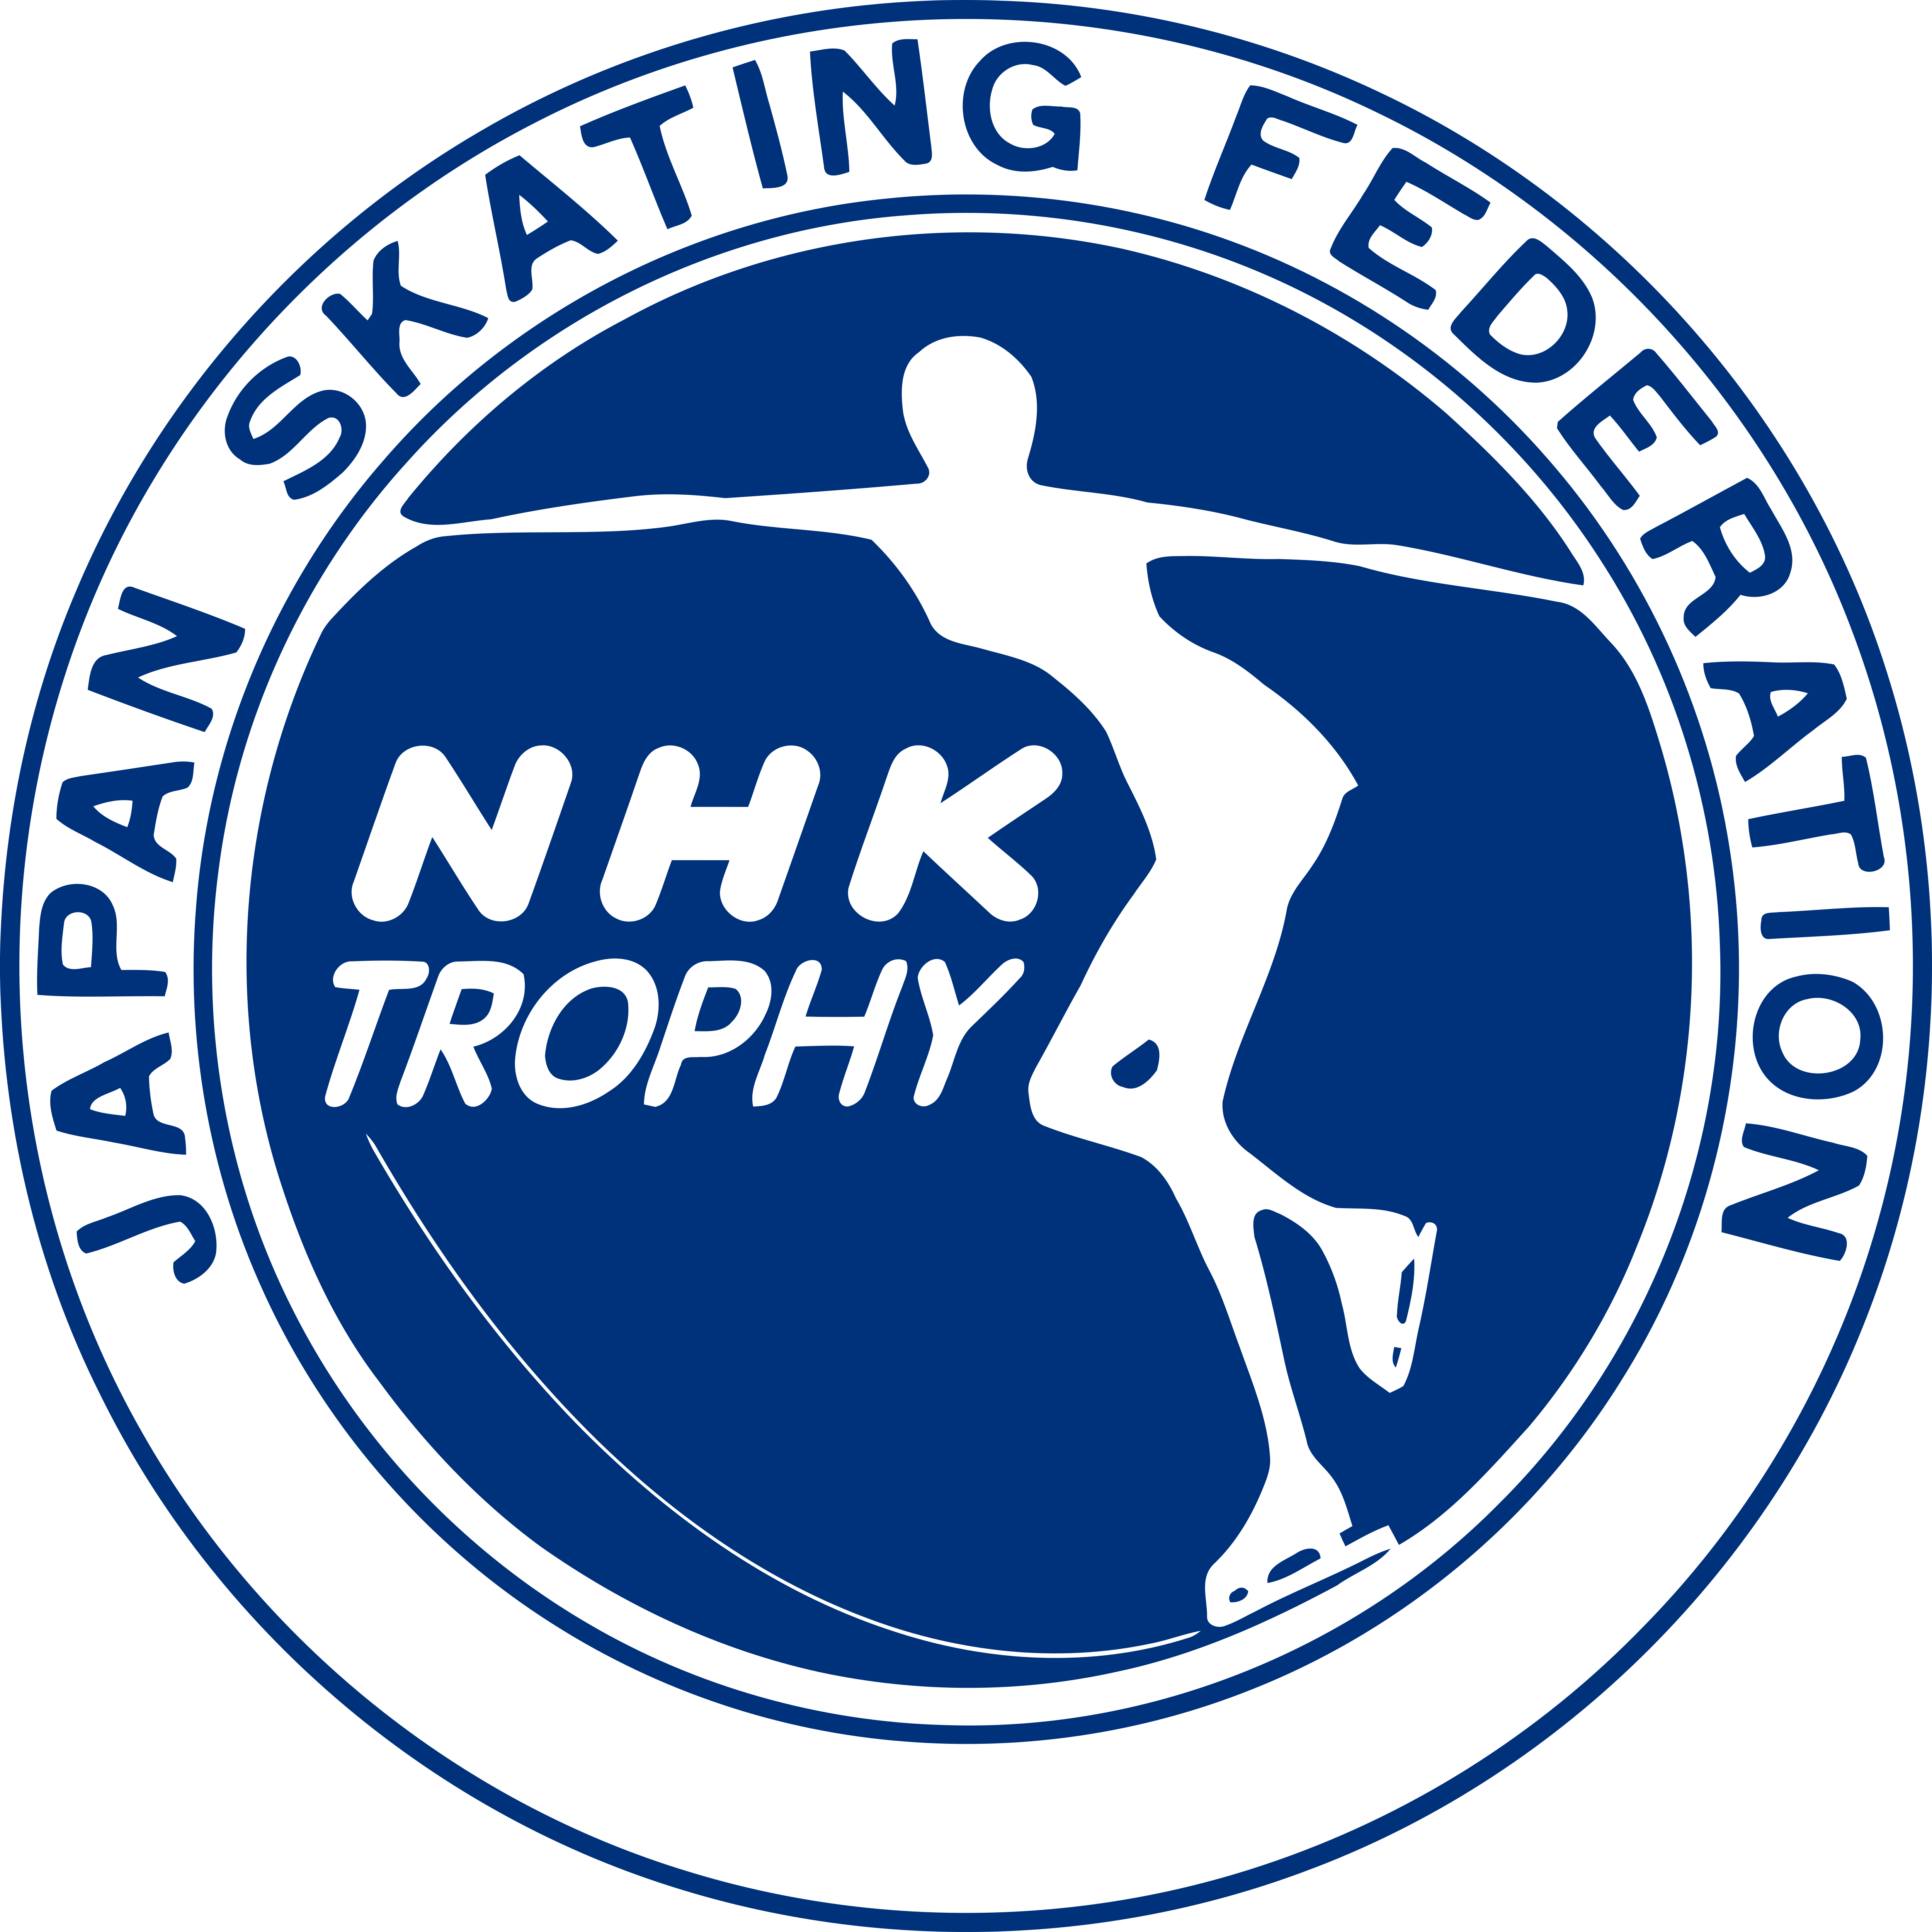 NHK Logo - NHK Trophy – Logos Download